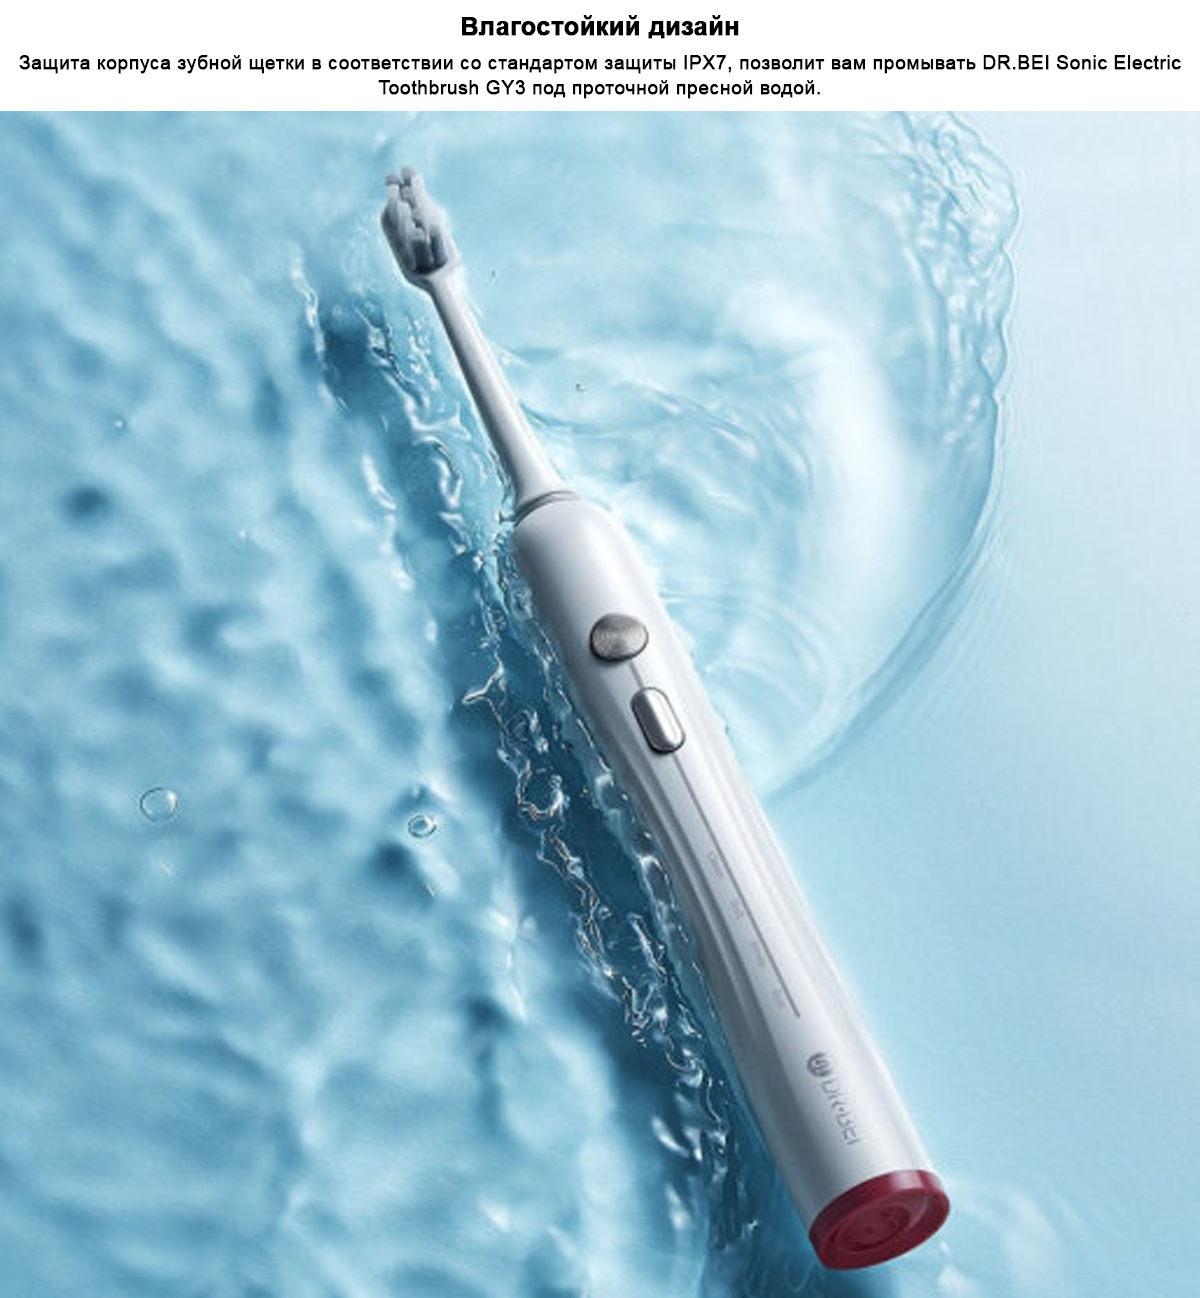 Электрическая зубная щетка DR.BEI Sonic Electric Toothbrush GY3